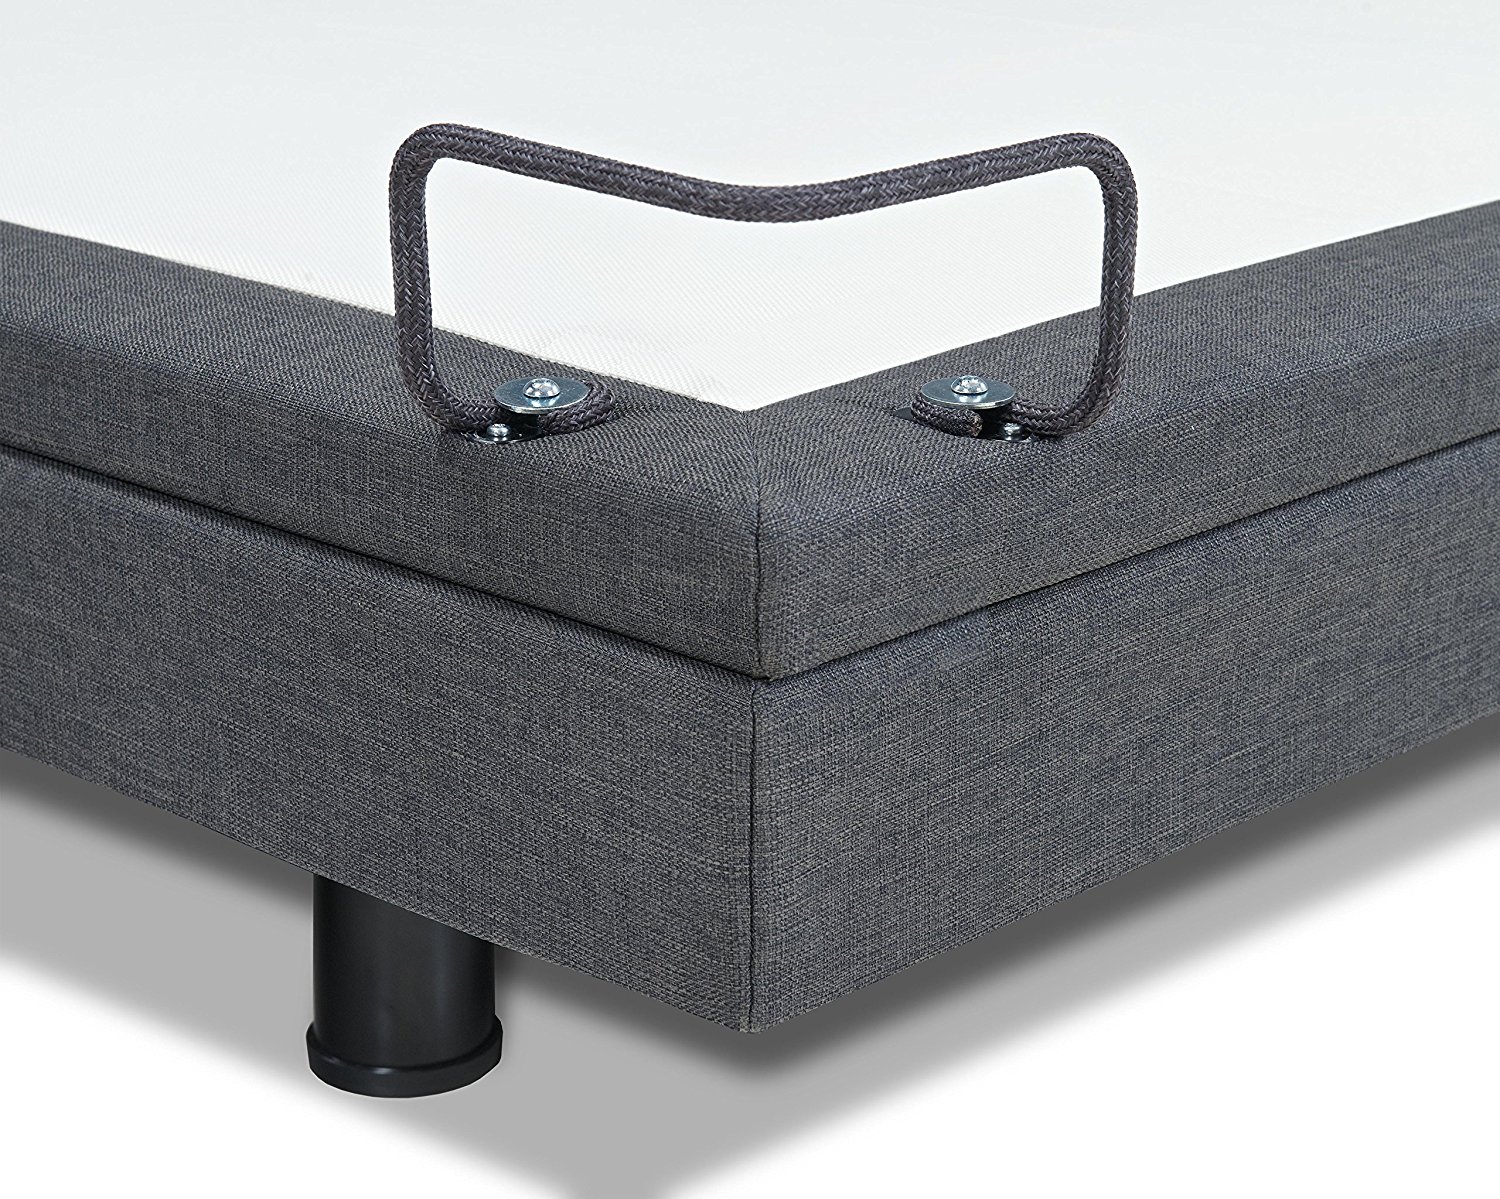 Reverie 7S Adjustable Bed Split King Mattress Retention System